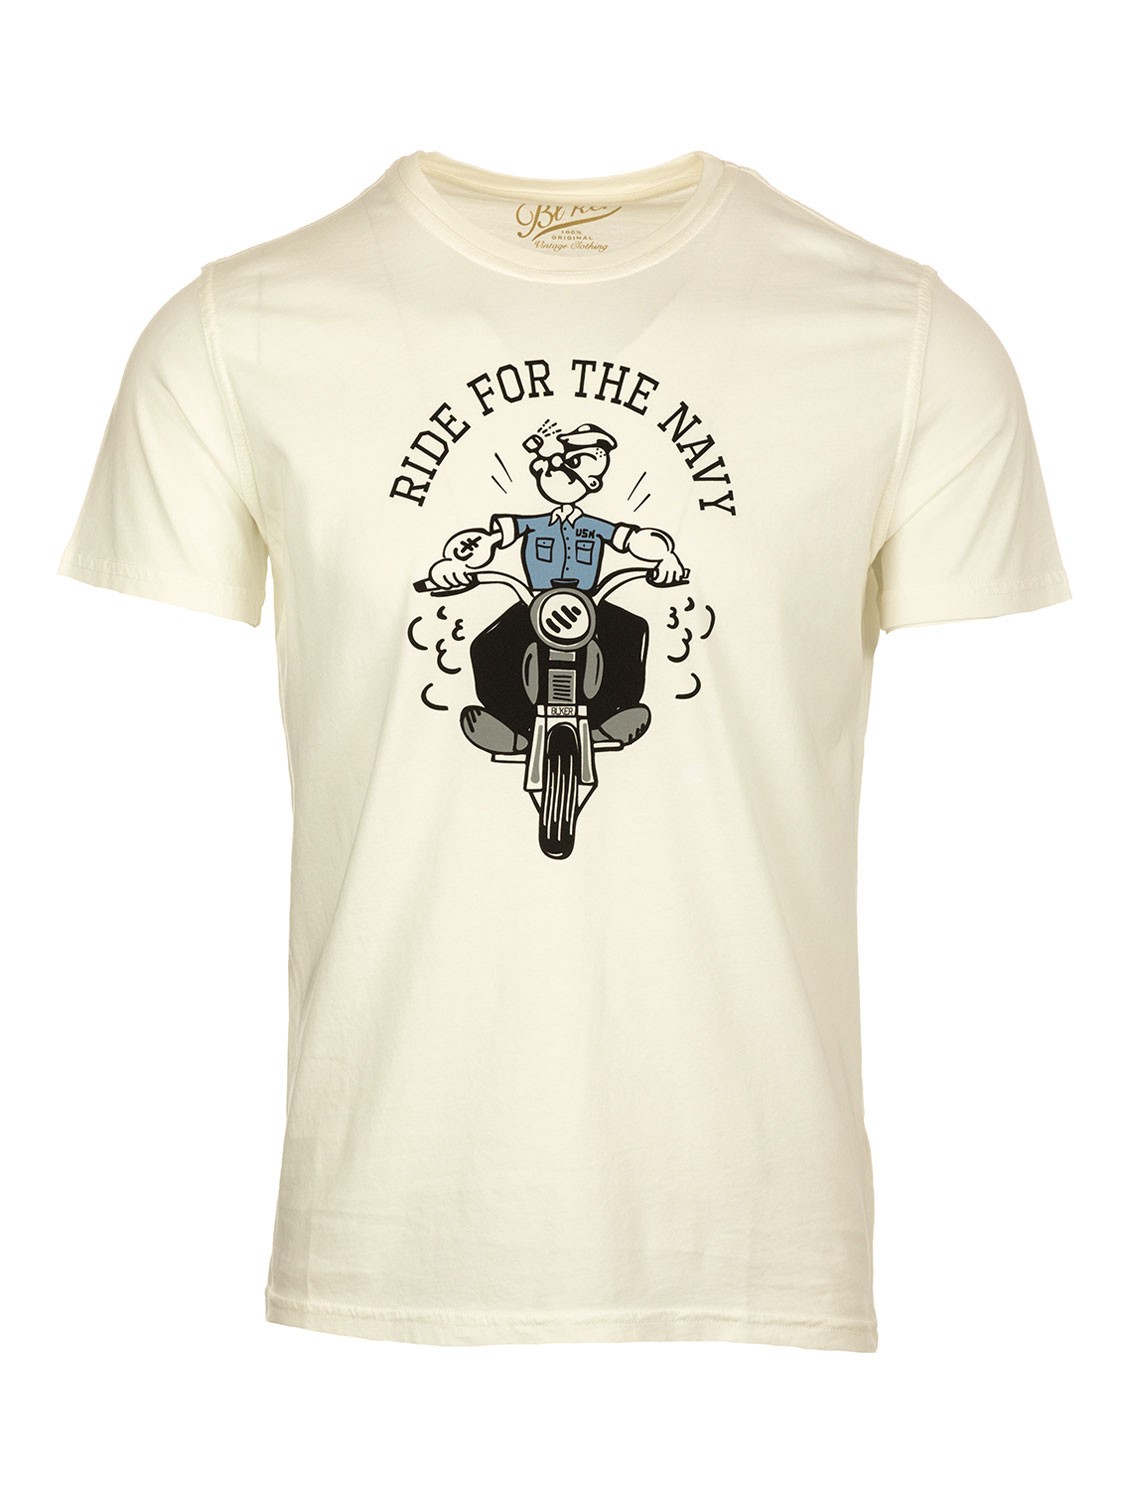 Bl'ker Men's T-shirt Graphic Navy Rider